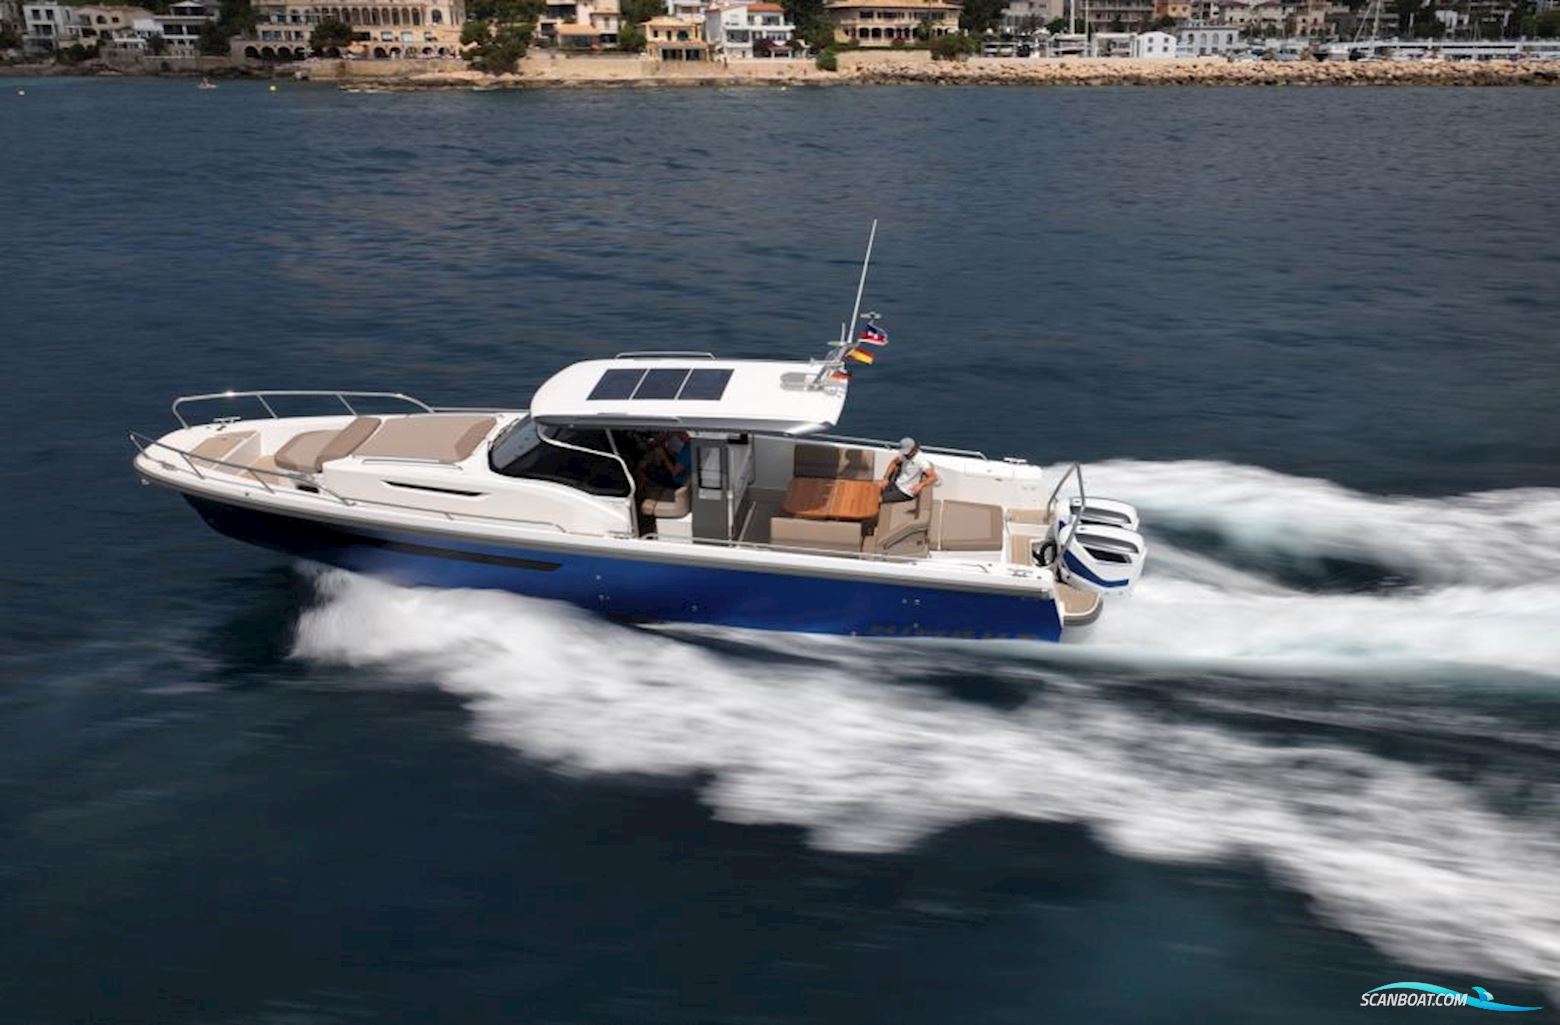 Nimbus T11 - Diesel Motor boat 2021, with Cox engine, Germany